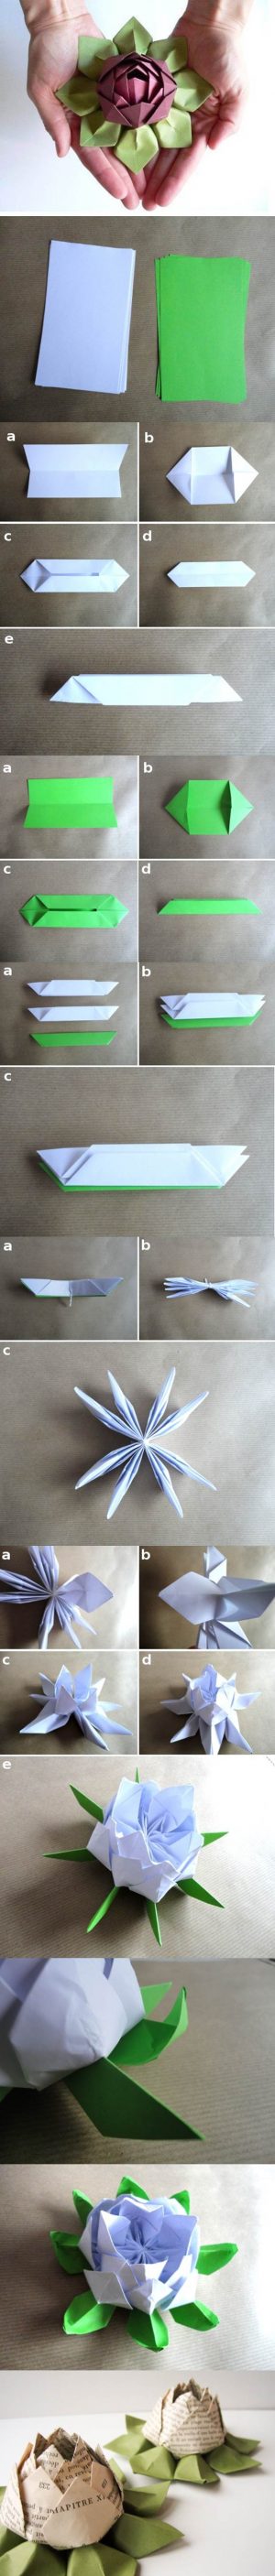 How To Make Origami Lotus Flower Video Diy Origami Lotus Flower